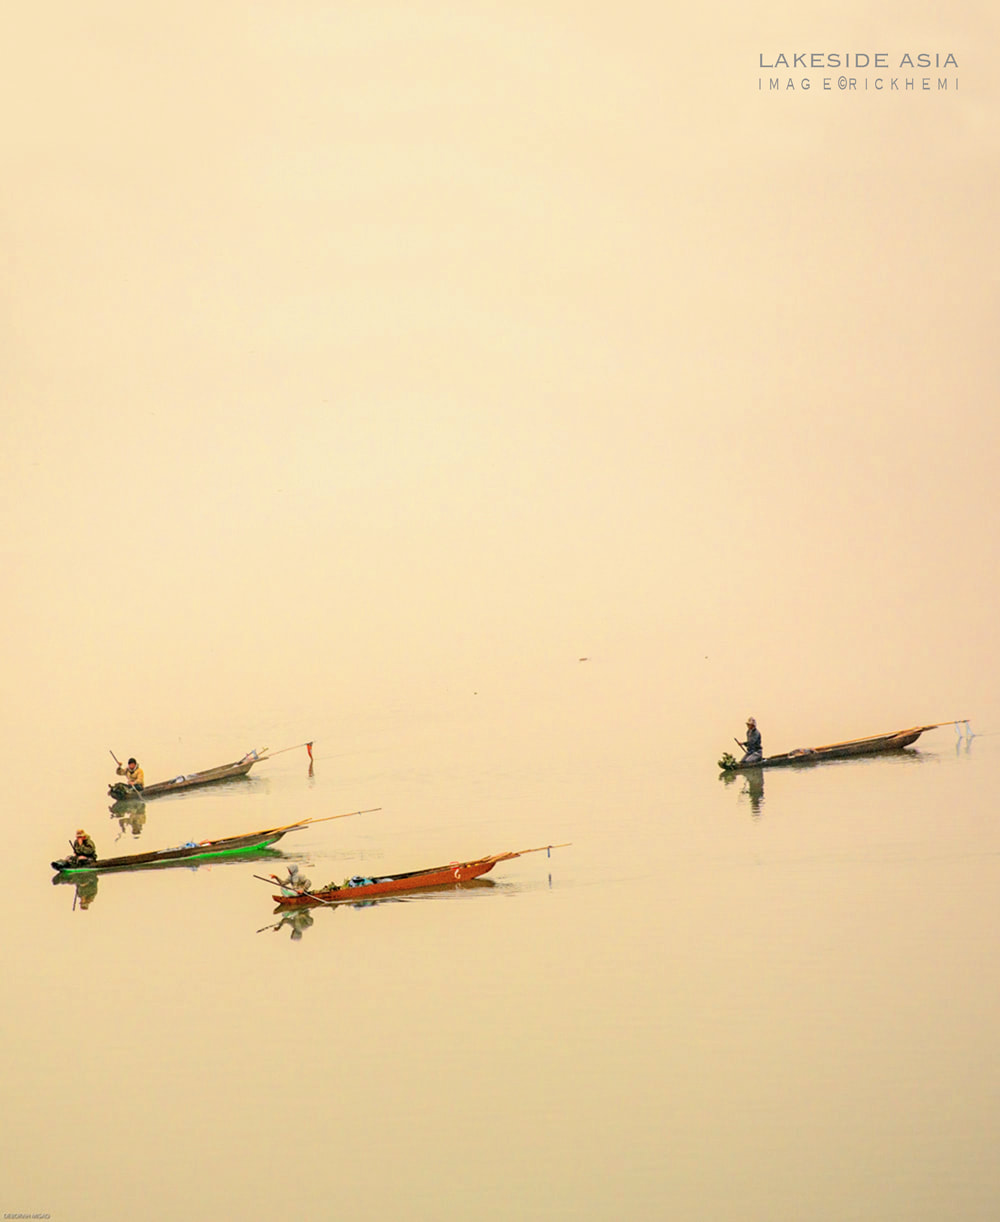 solo overland travel Asia, dugout lakeside fisherman, image by Rick Hemi 